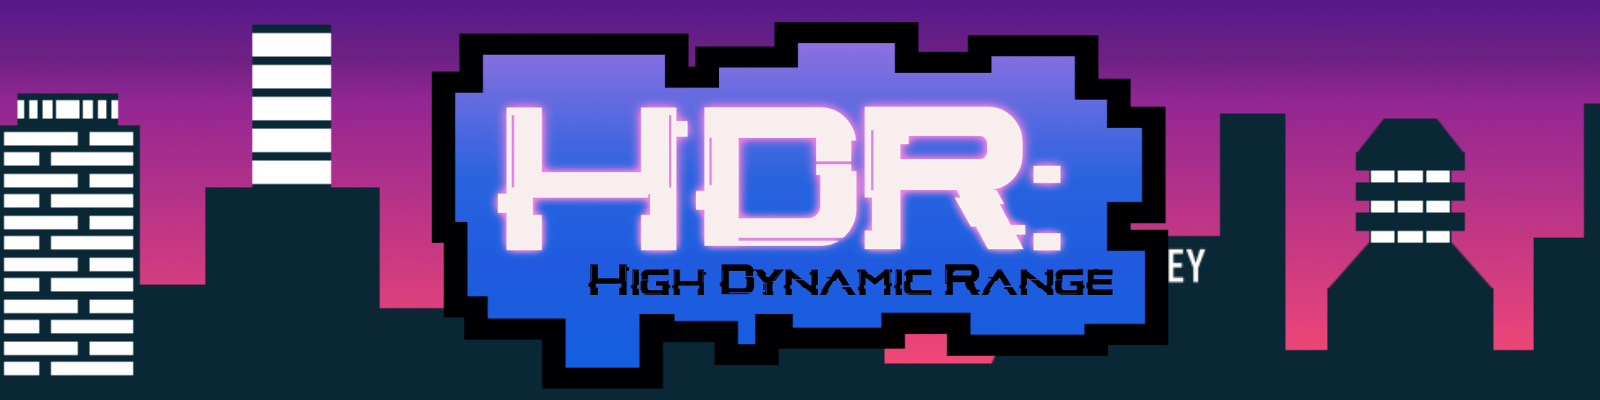 HDR: High Dynamic Range